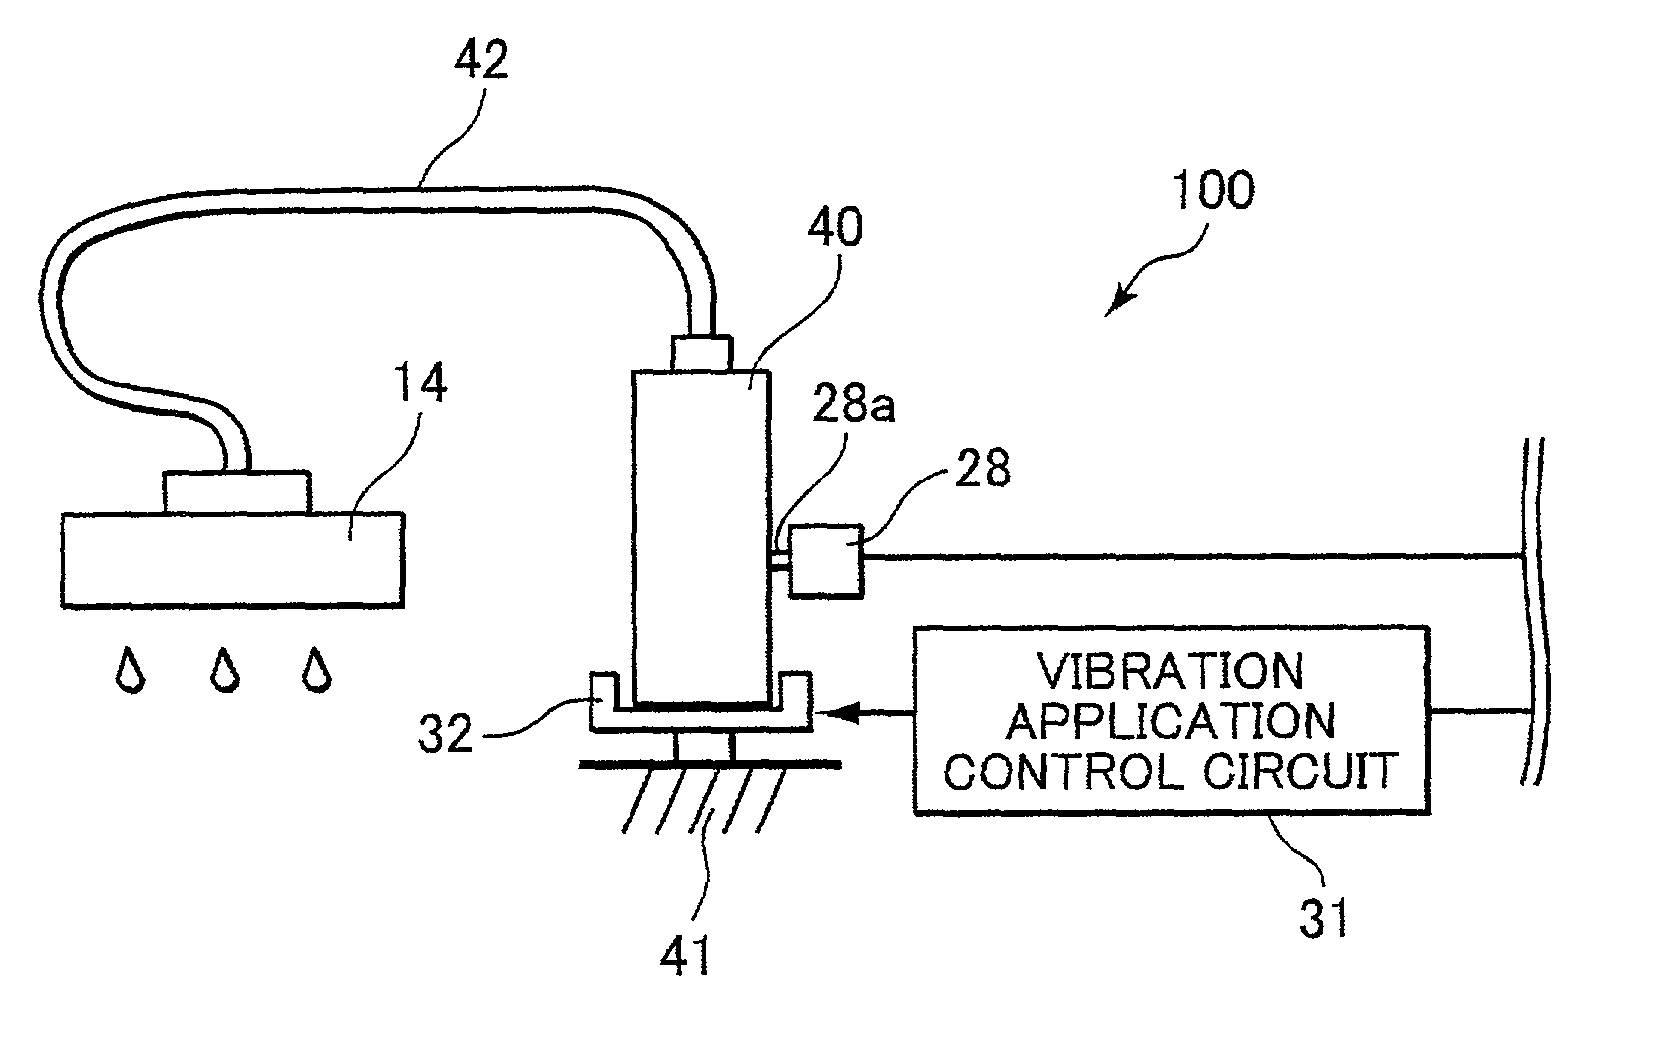 Inkjet device including ultrasonic vibrator for applying ultrasonic vibration to ink